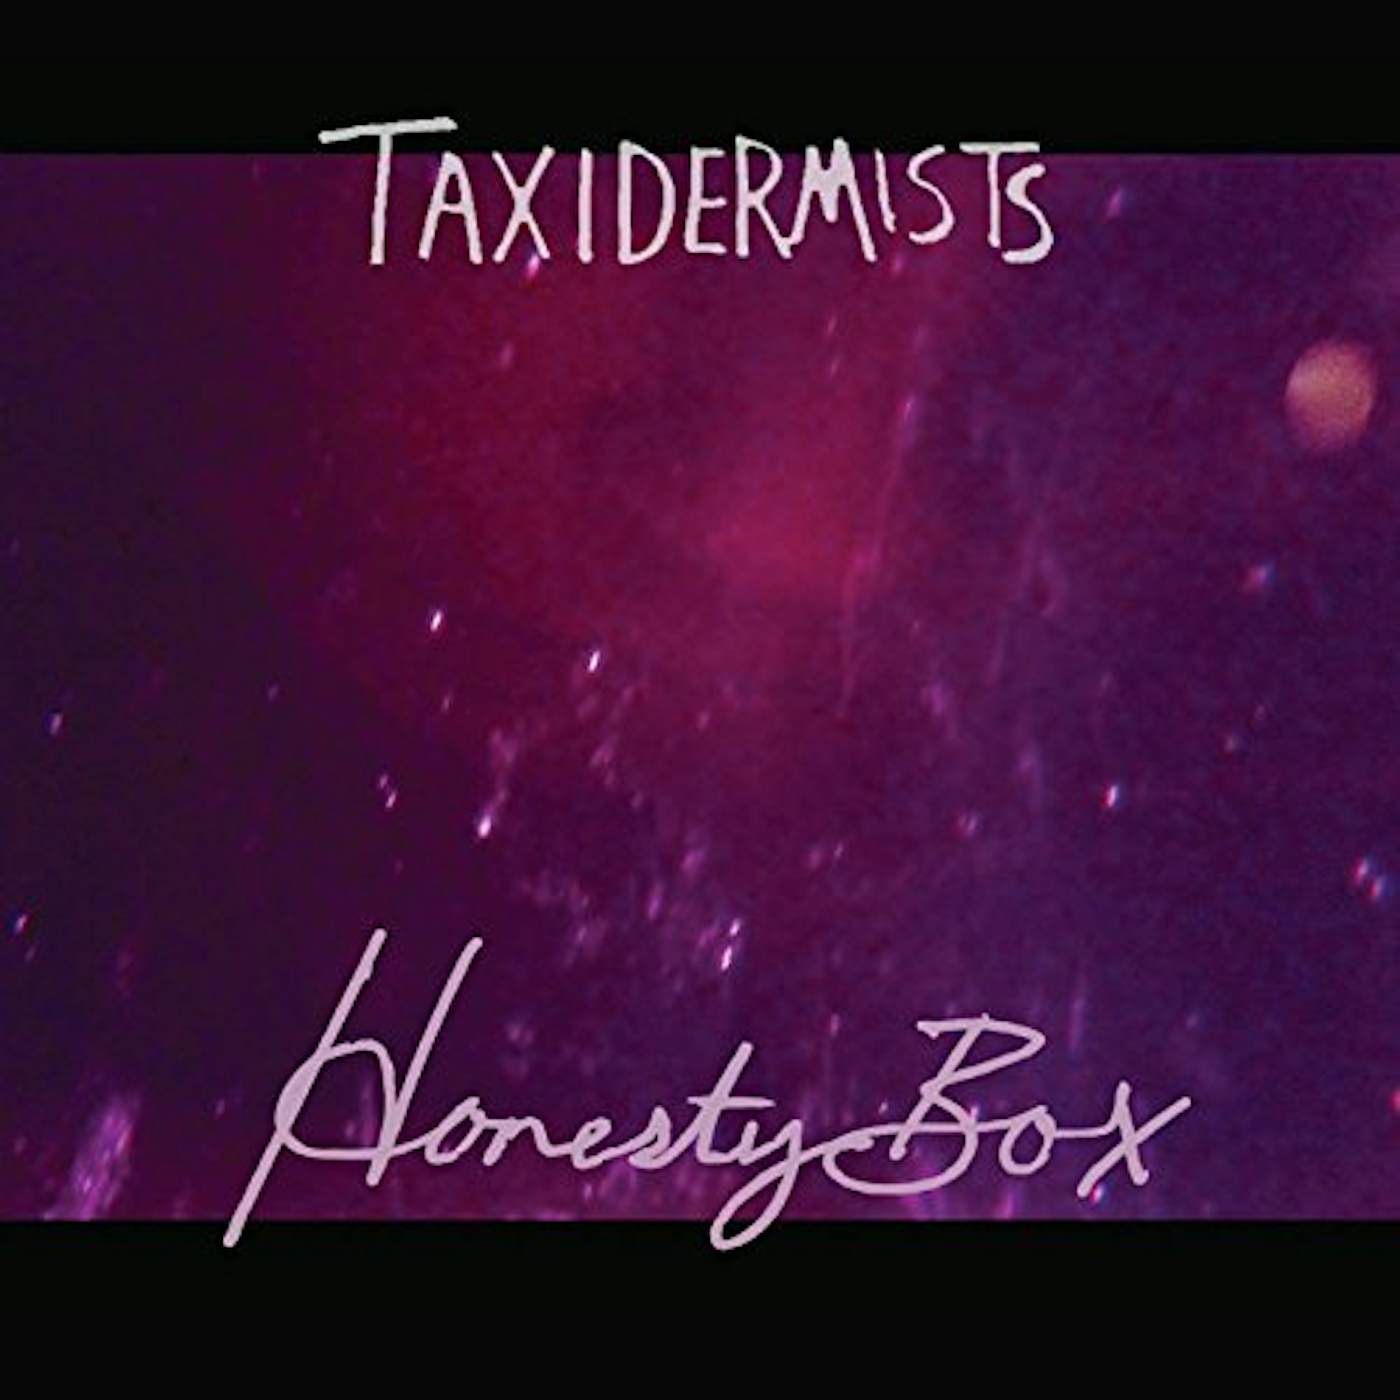 The Taxidermists HONESTY BOX CD